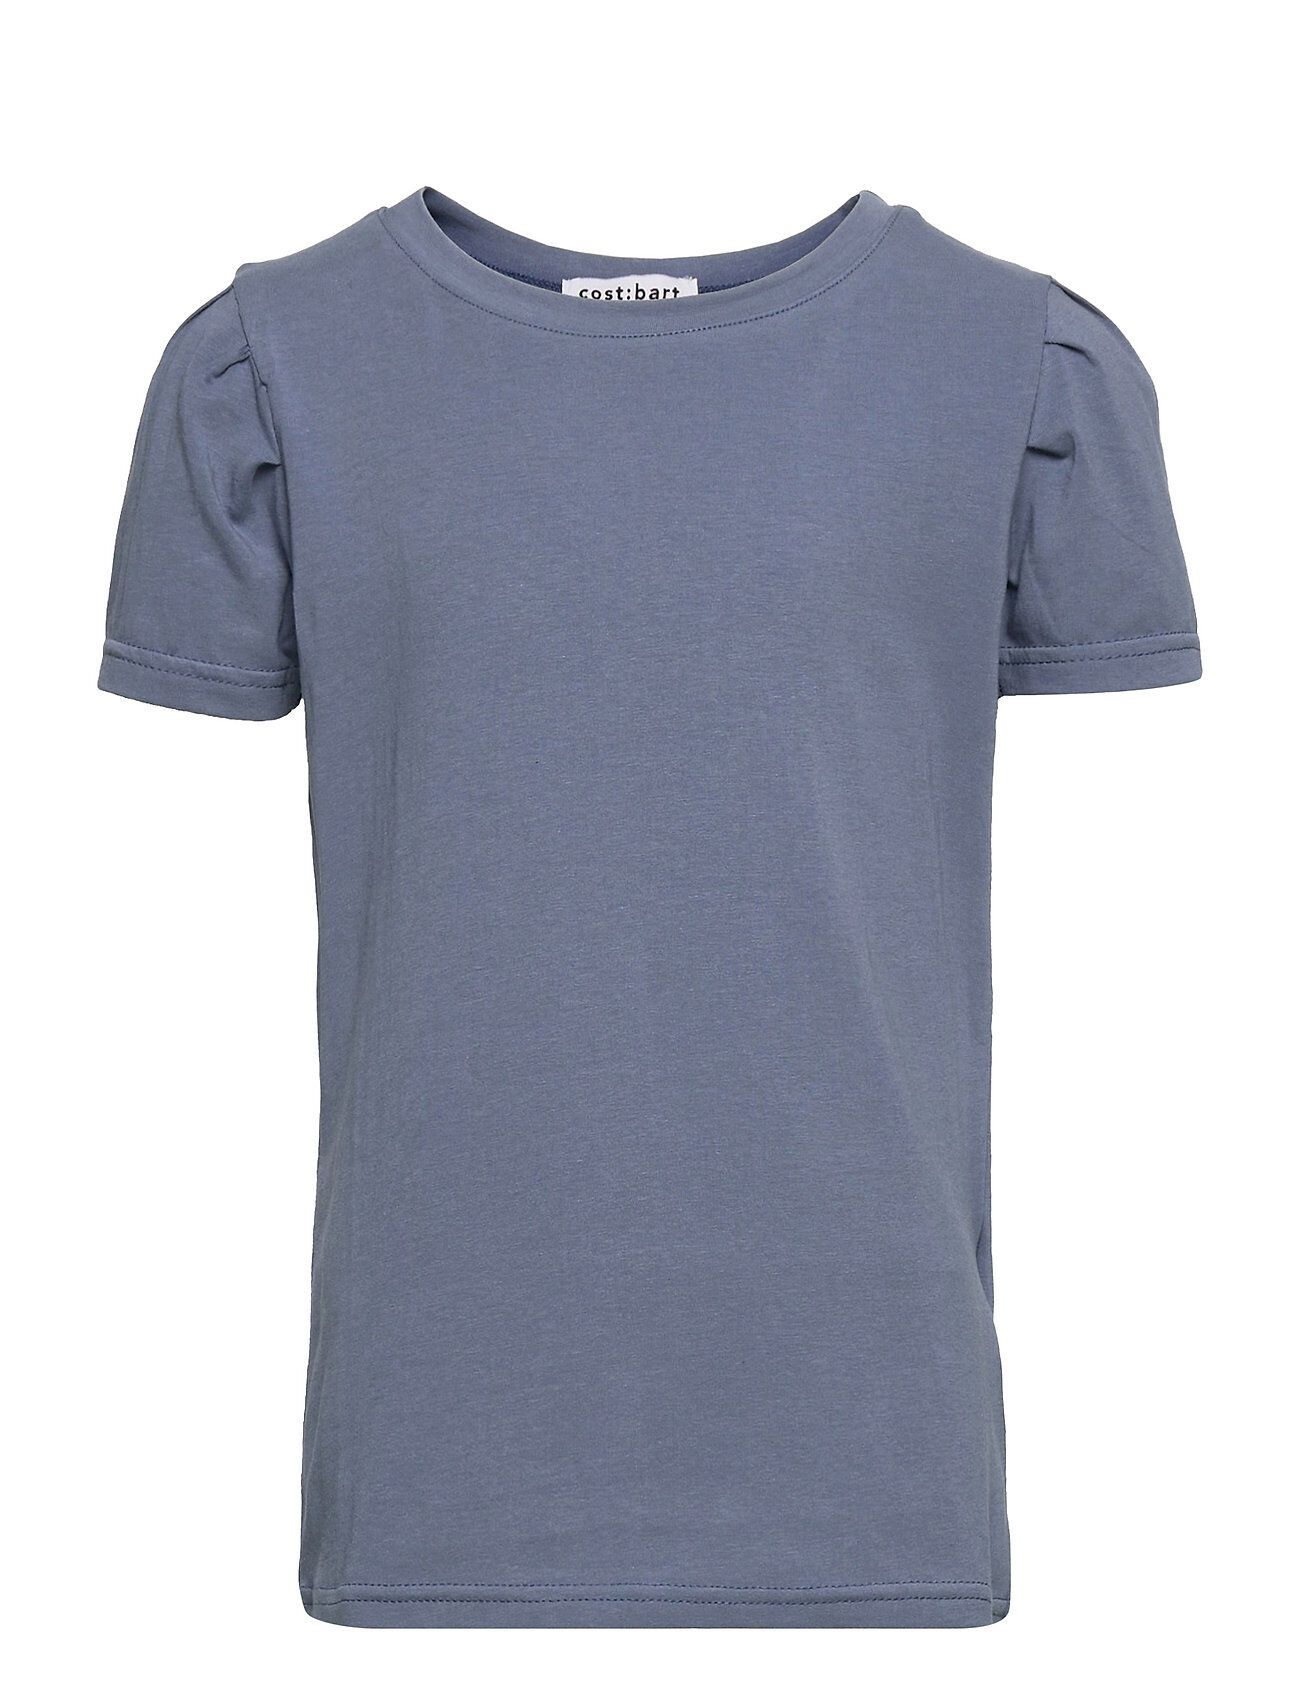 Costbart Cbolady Ss Tee T-shirts Short-sleeved Blå Costbart